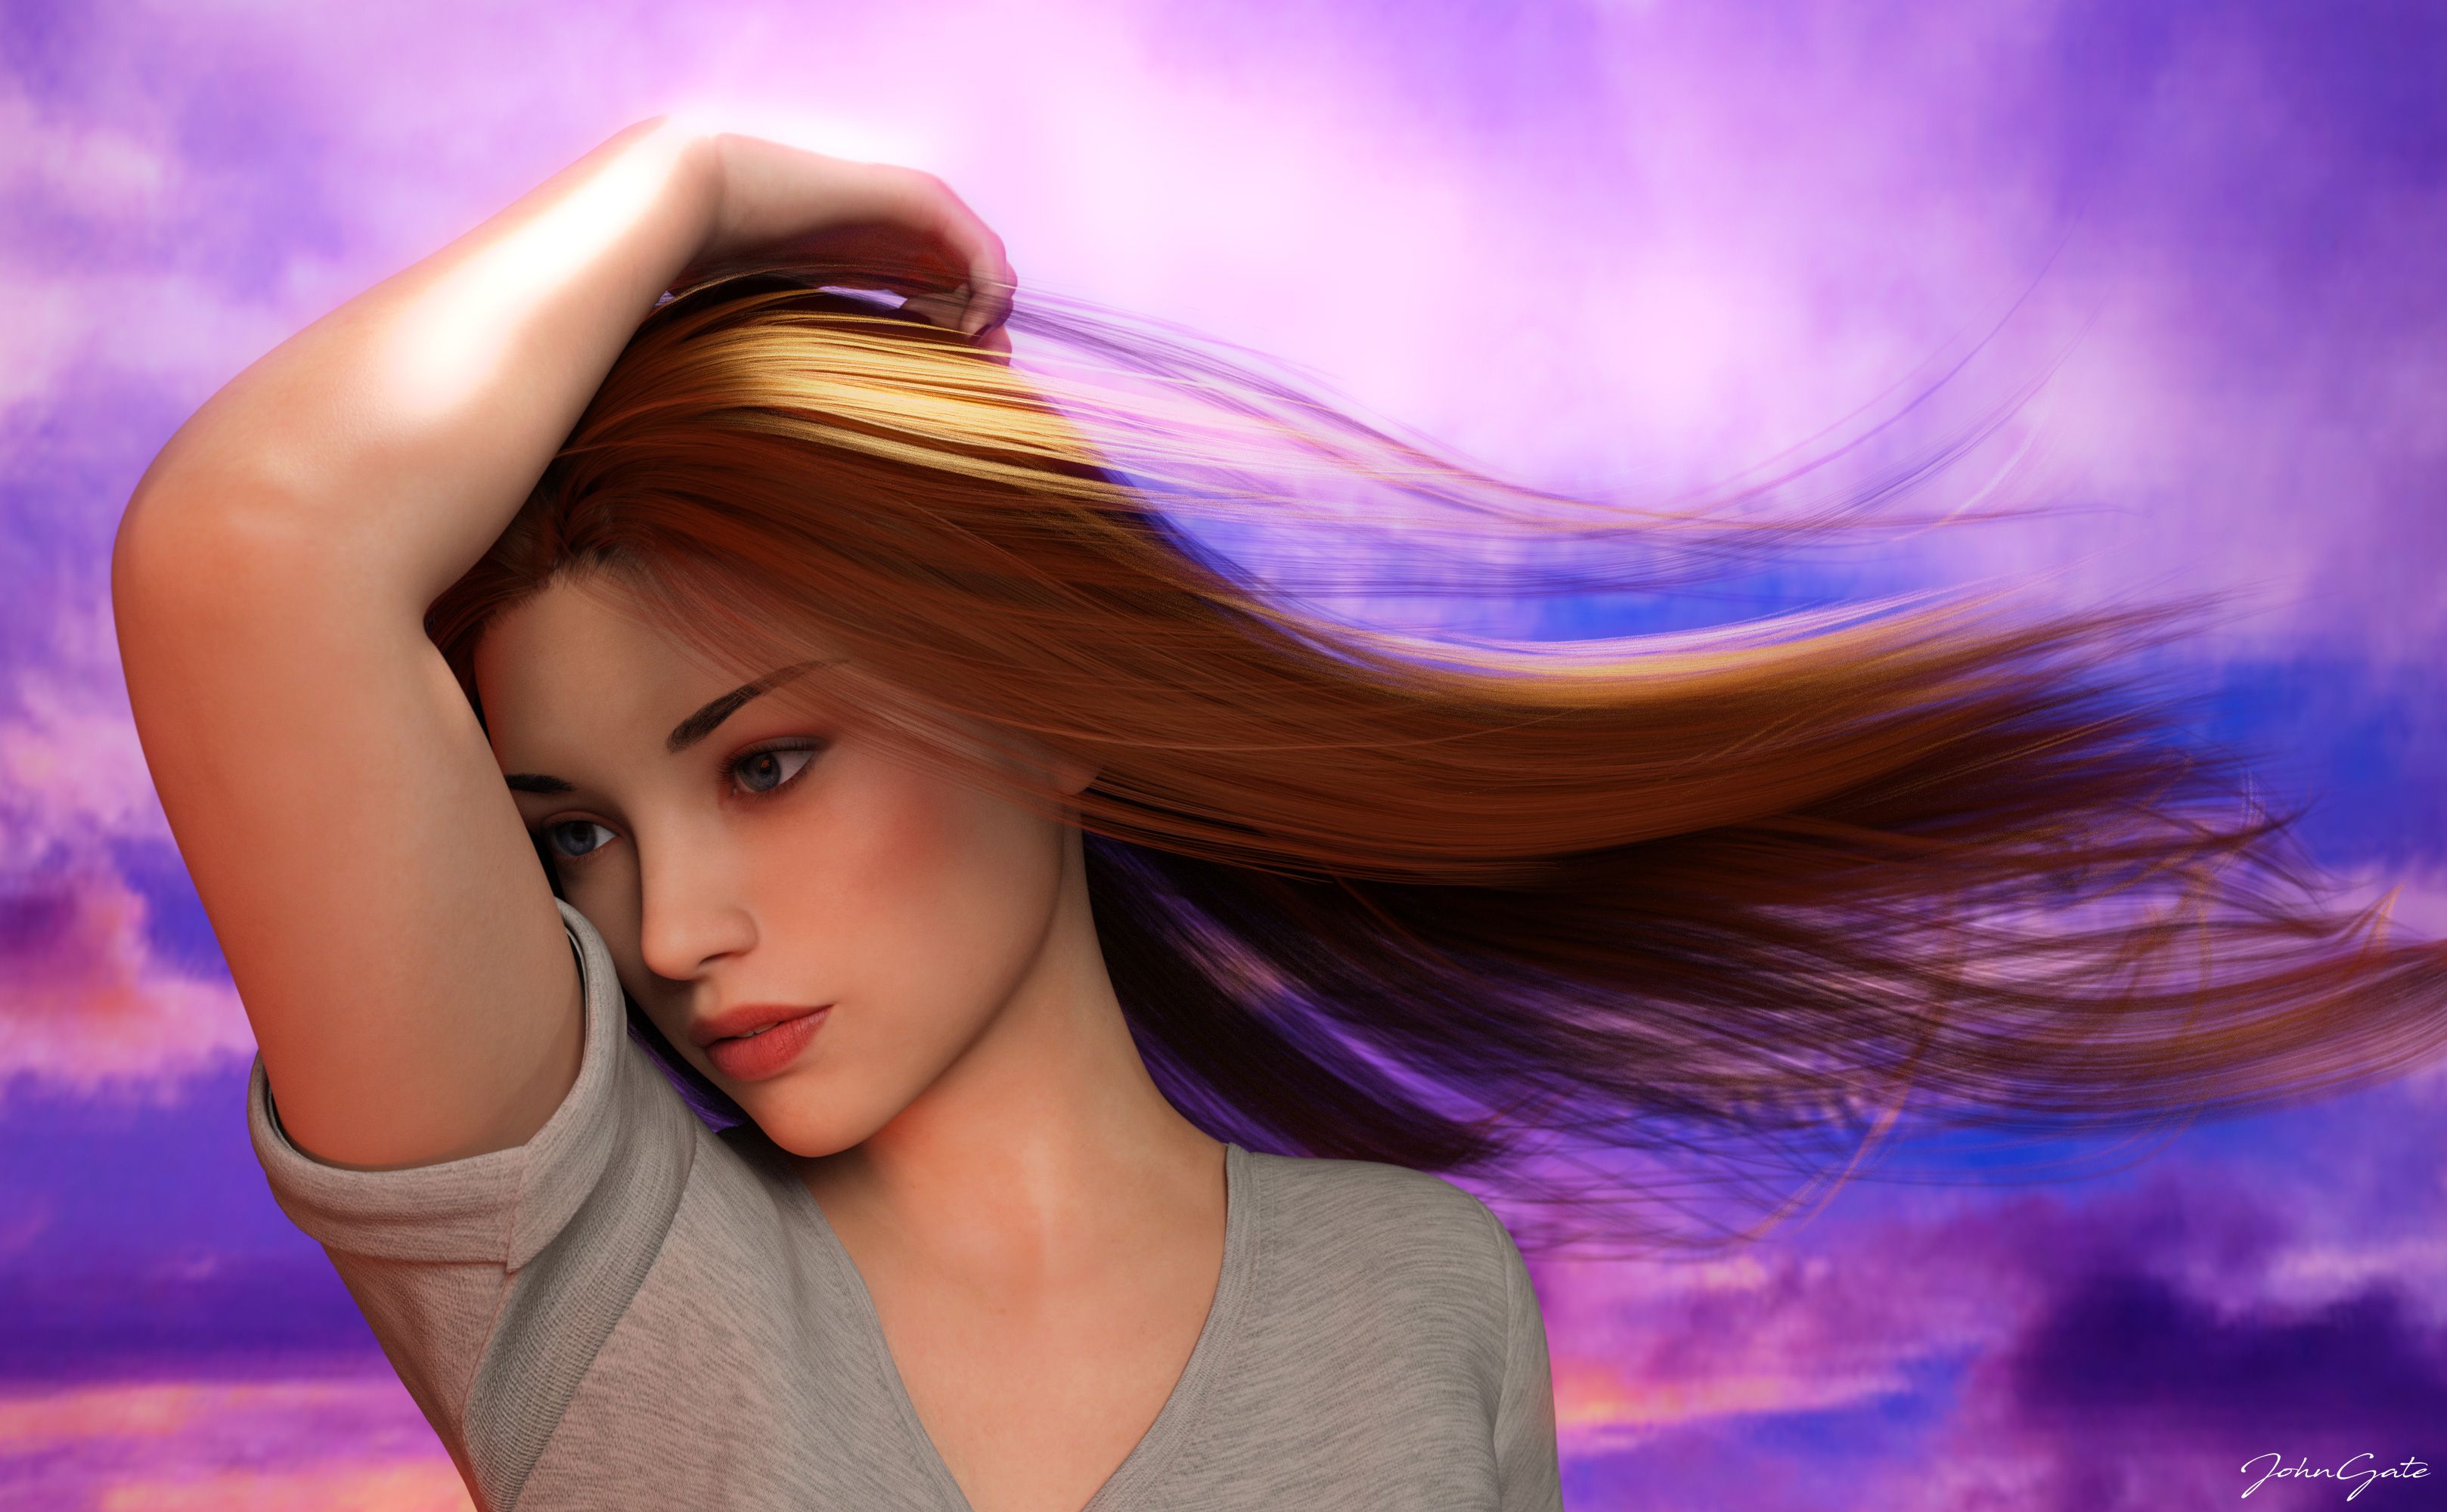 Brown Hair Girl Digital Art, HD Fantasy Girls, 4k Wallpaper